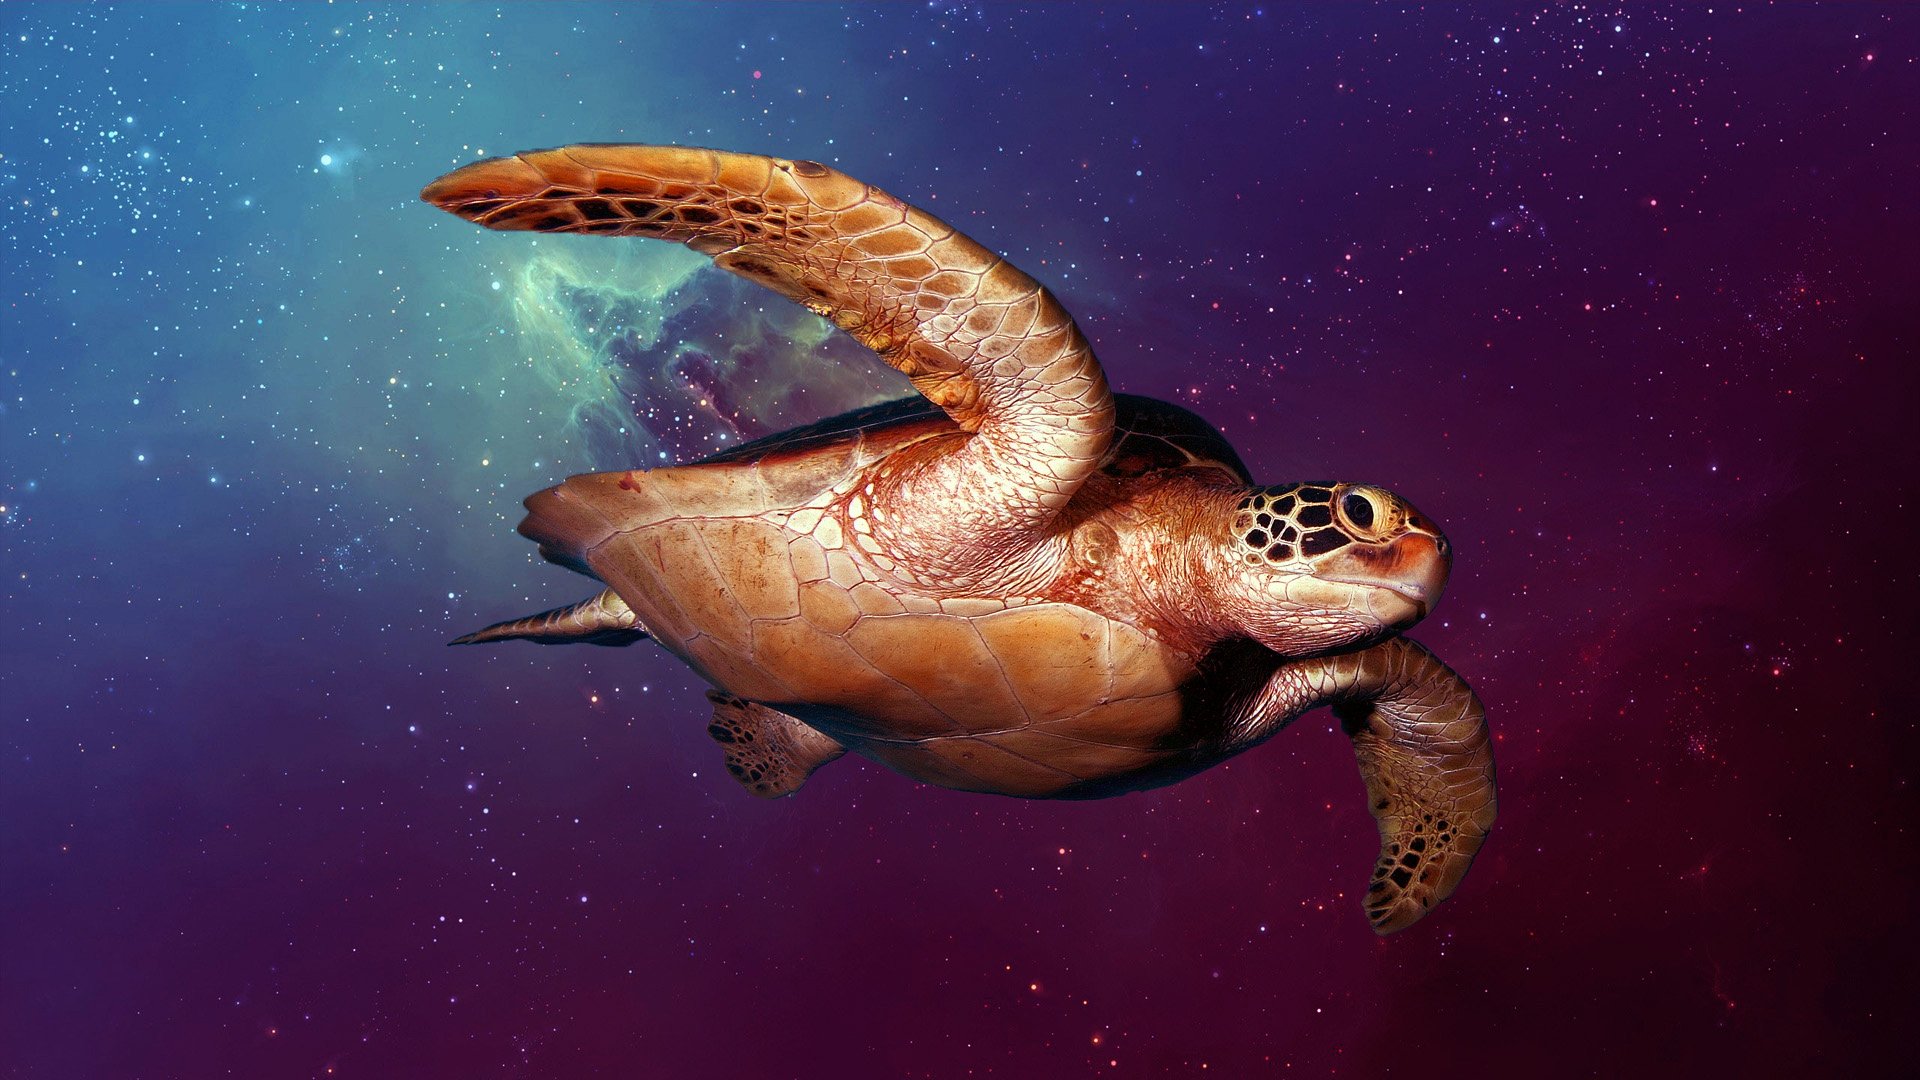 Space Turtle Wallpaper - Space Turtle Wallpaper Hd - HD Wallpaper 